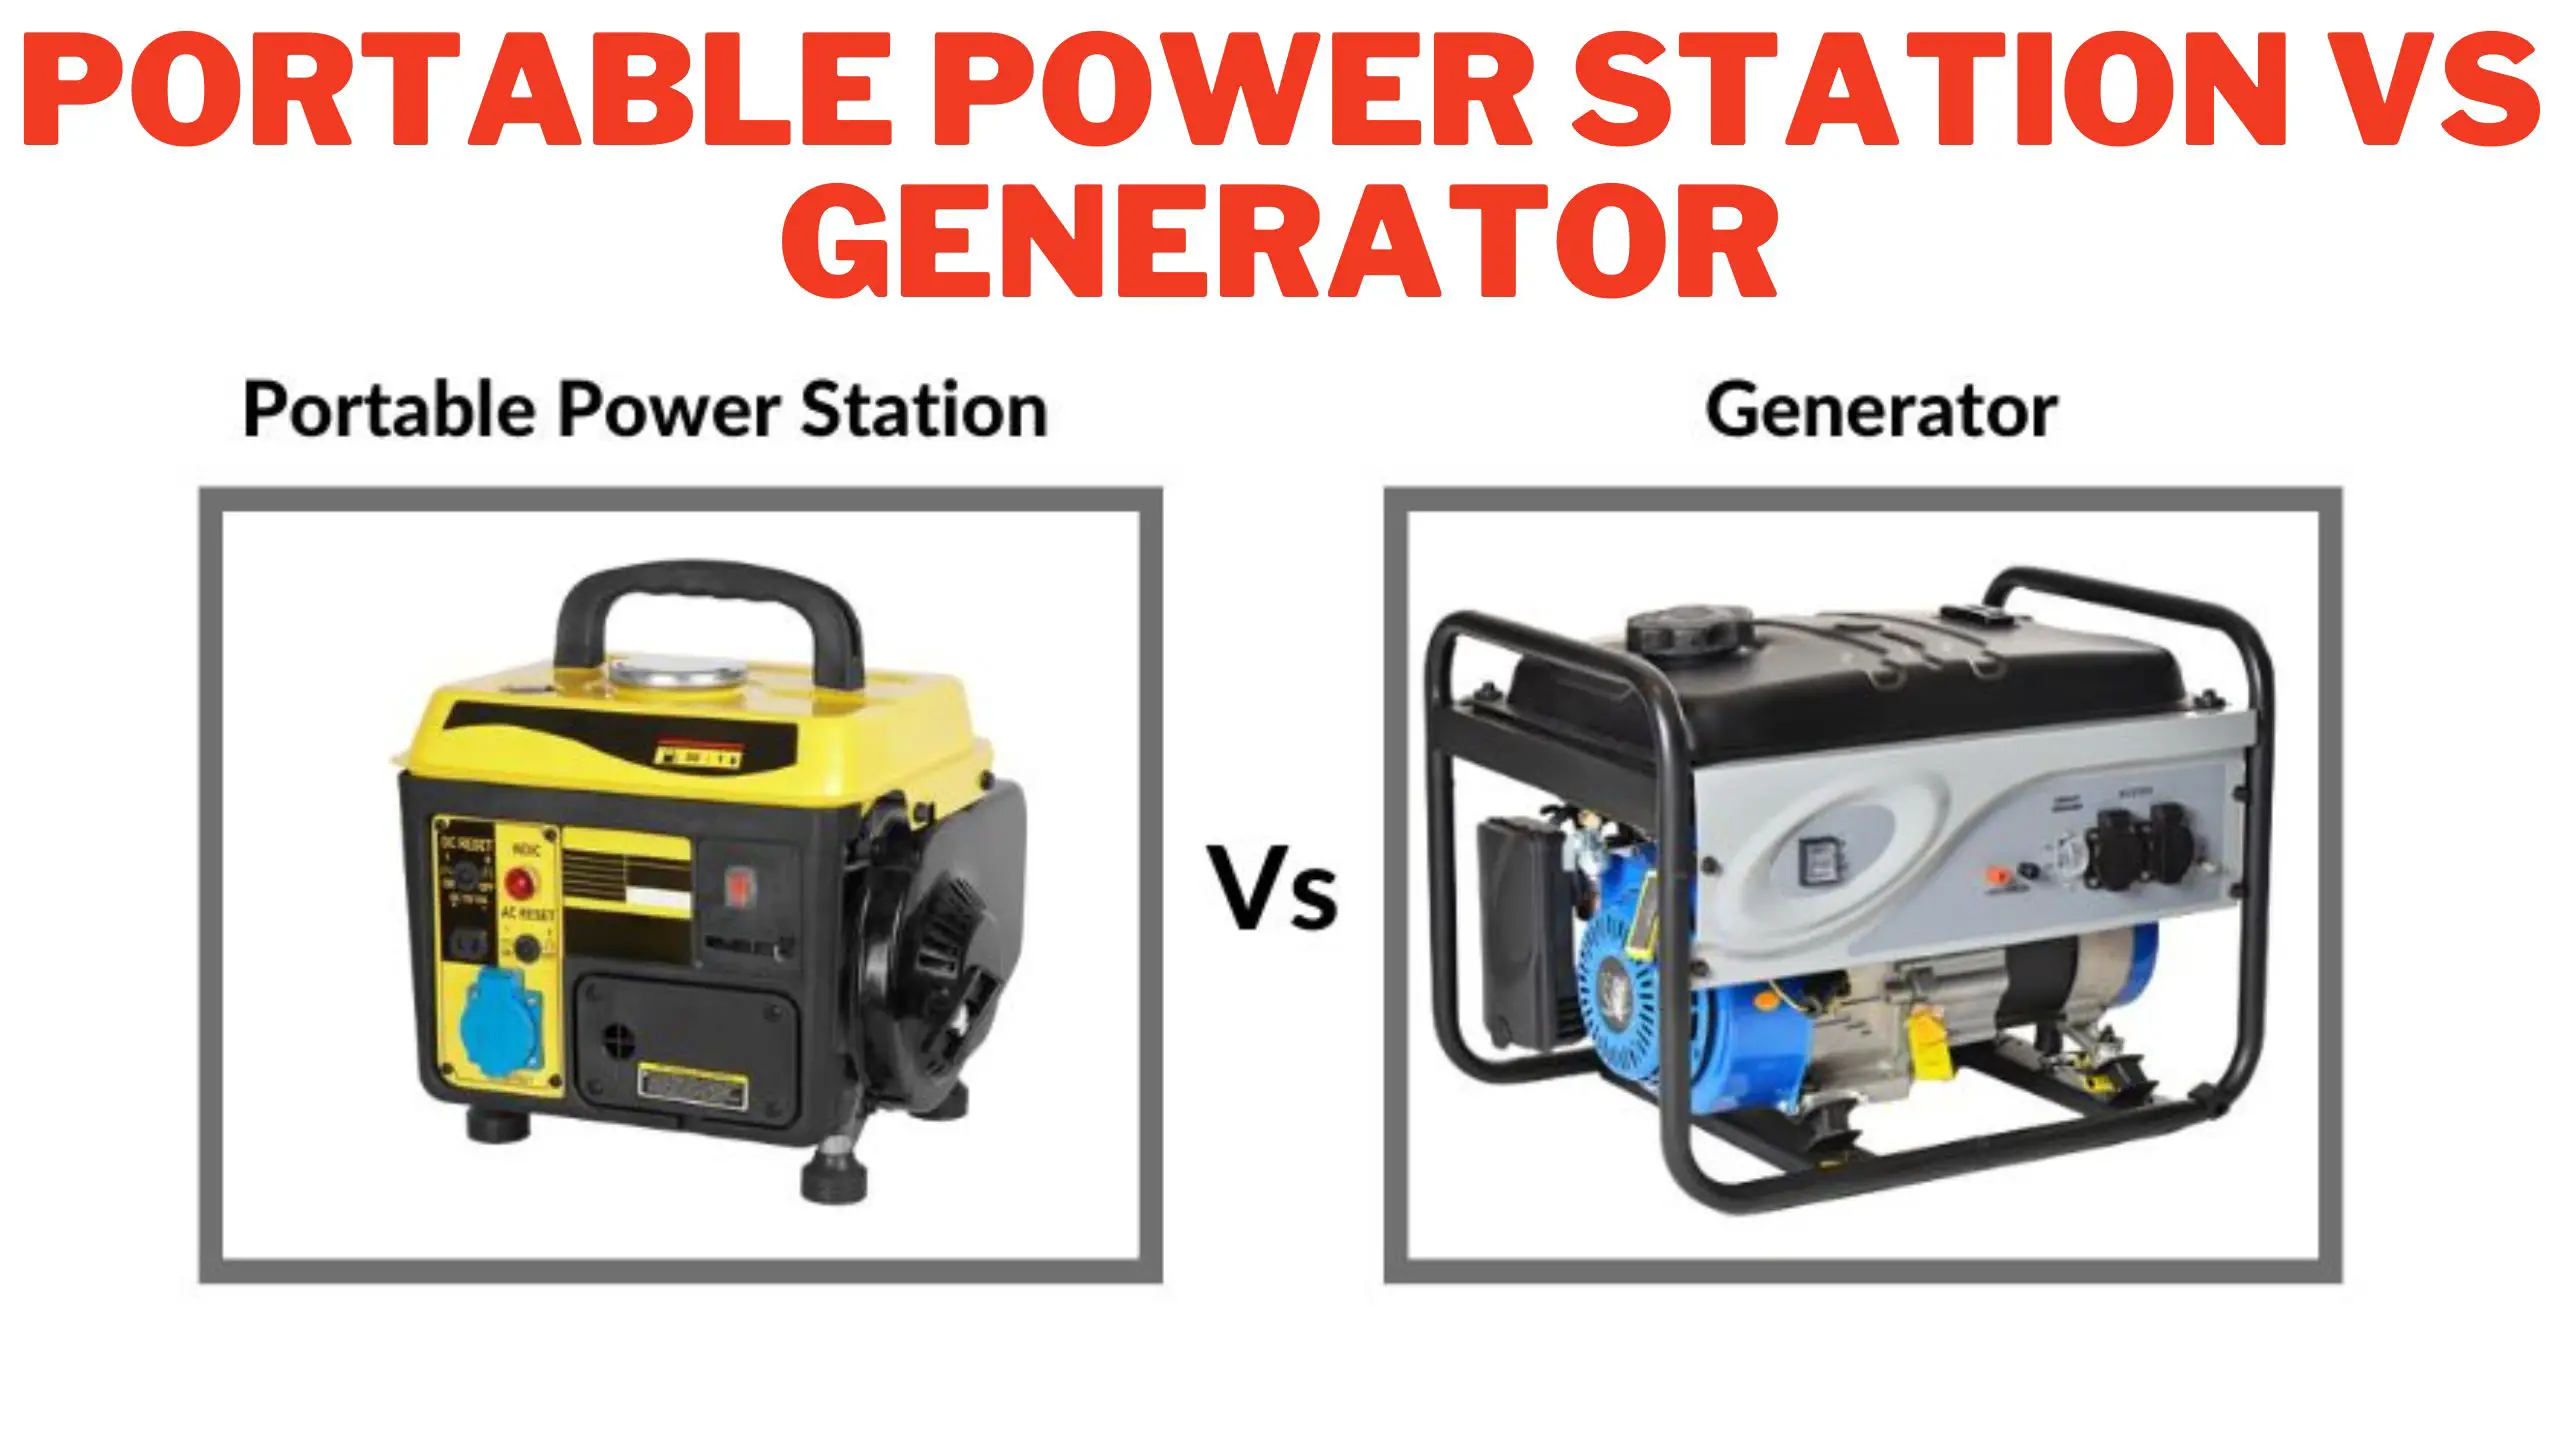 Portable Power Station vs Generator